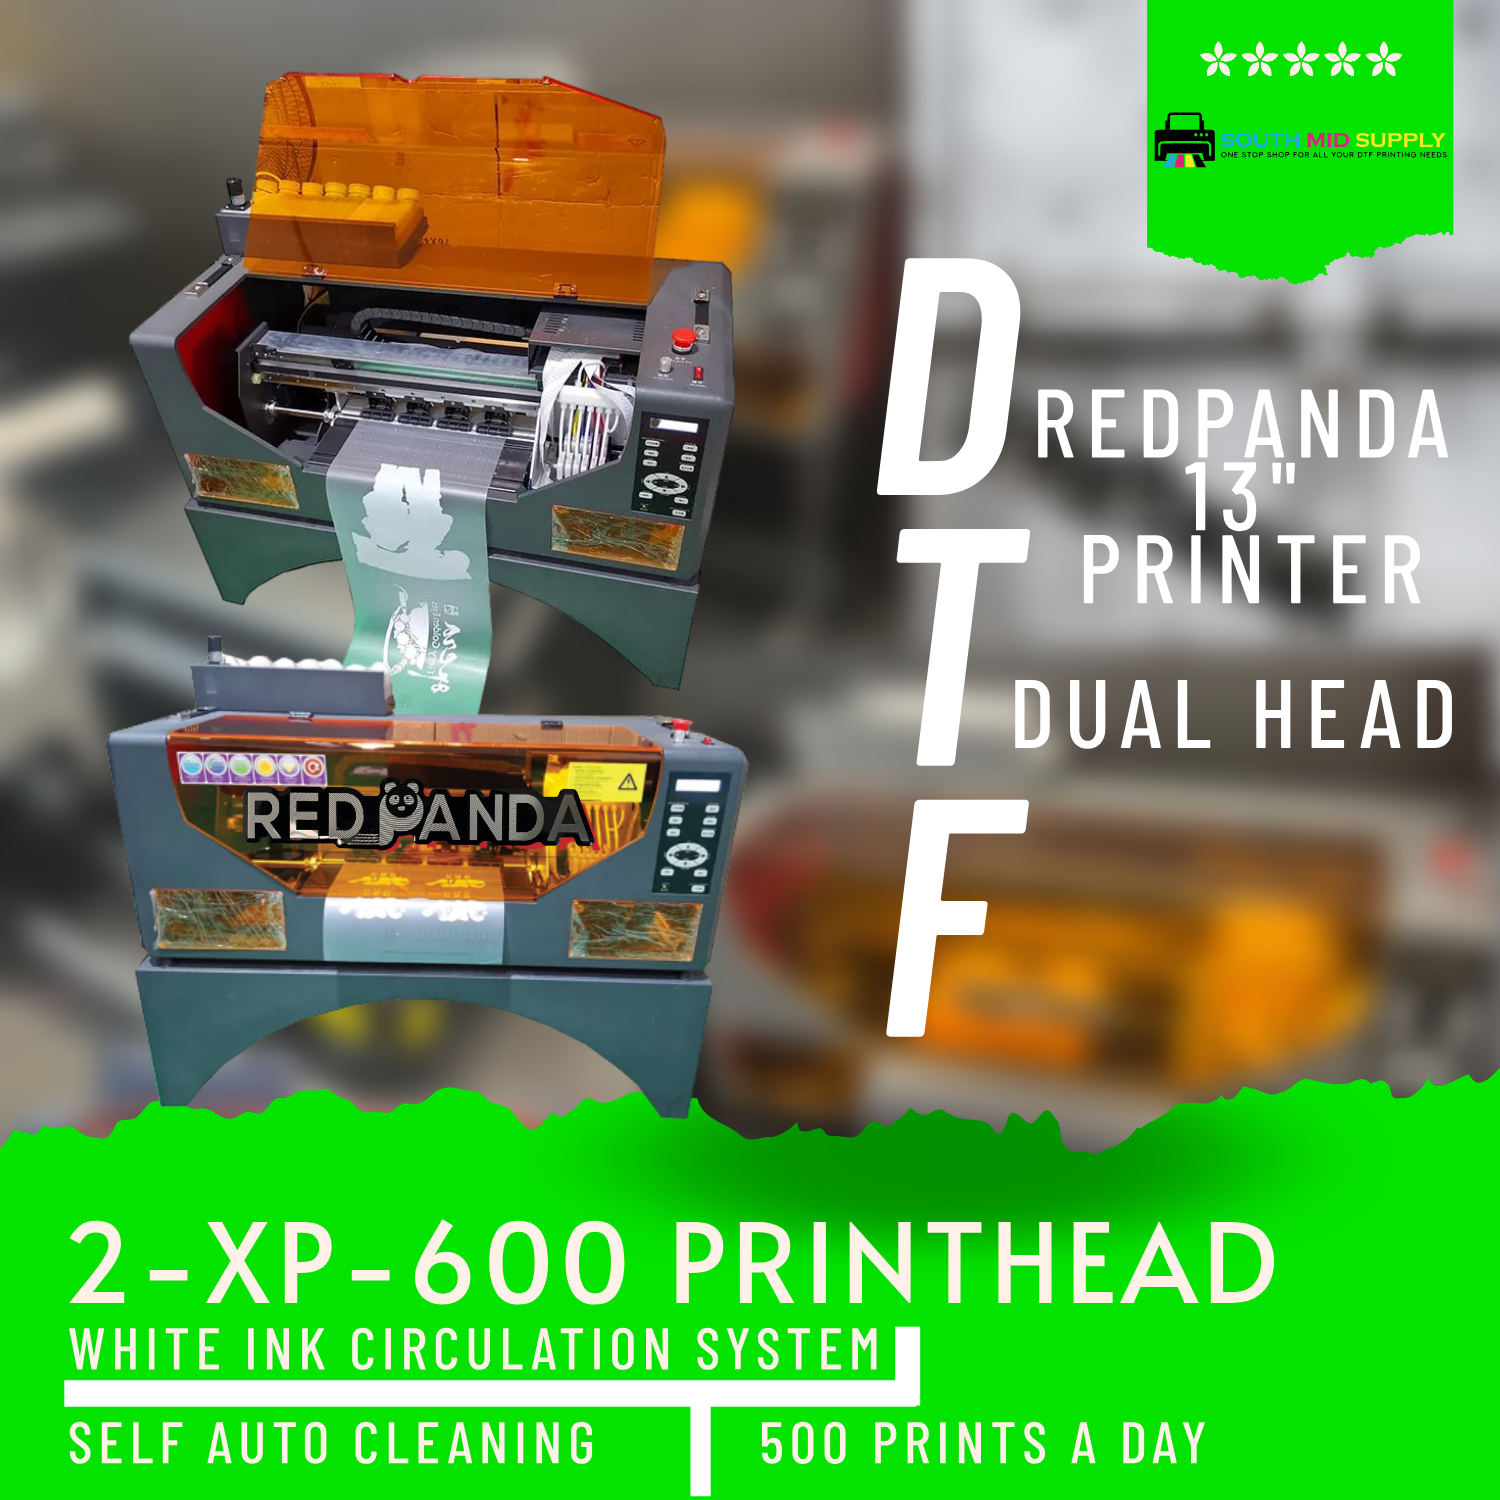 RP XP600 C30 (Direct to film Printer)